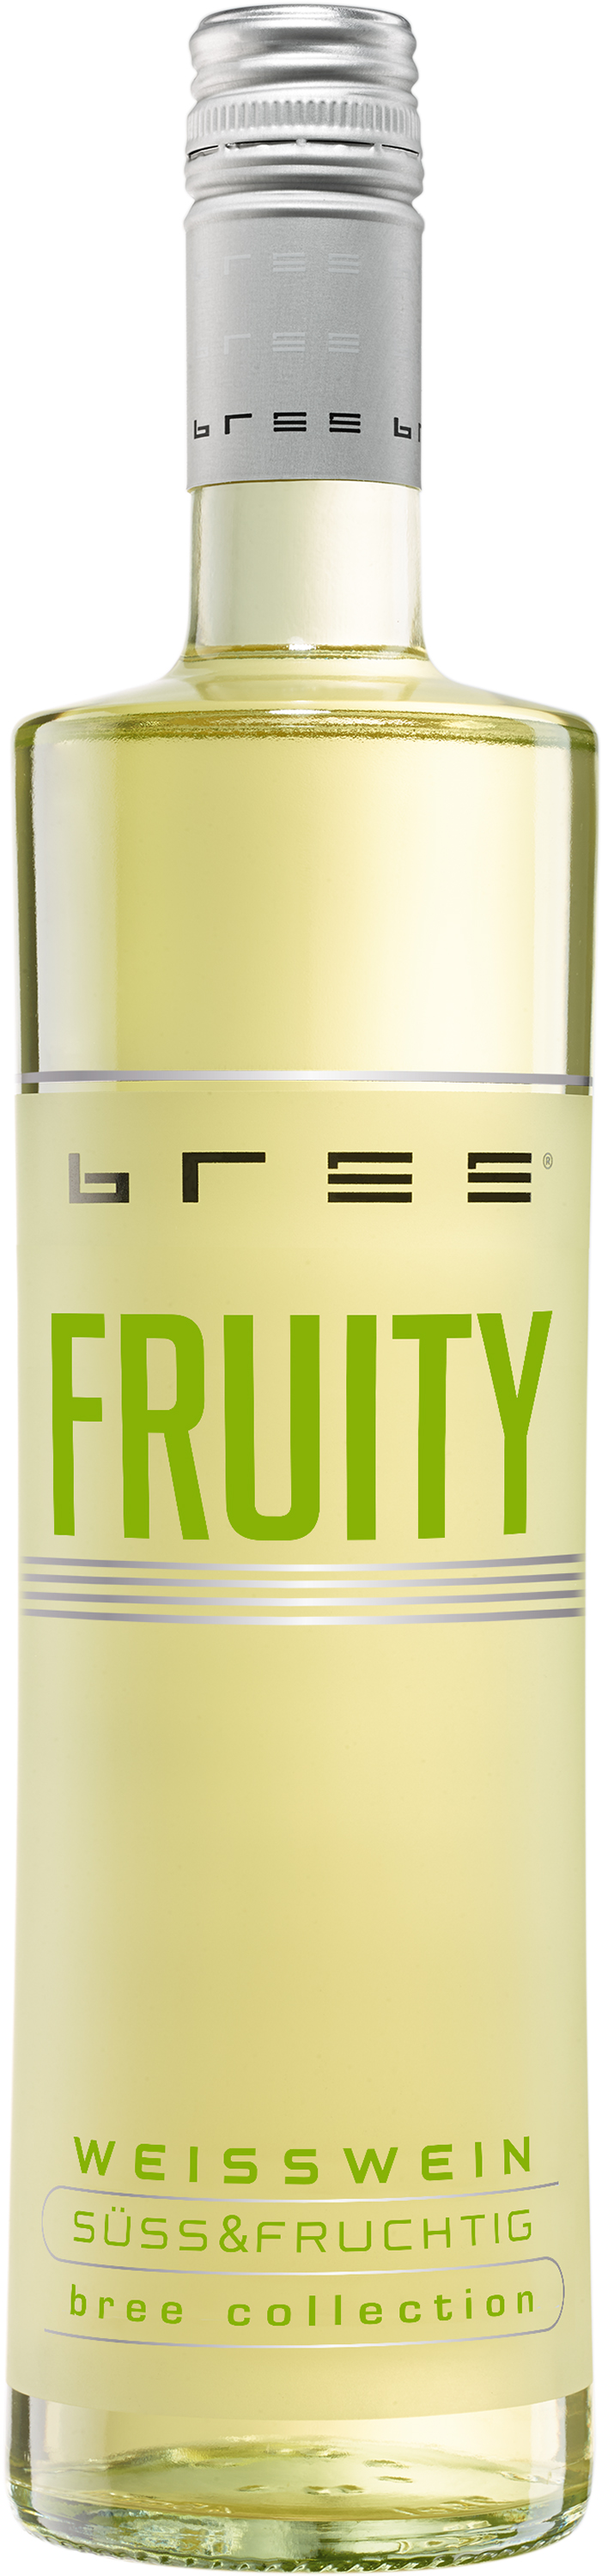 Bree - FRUITY Weißwein - süß & fruchtig 0,75l 9%vol.